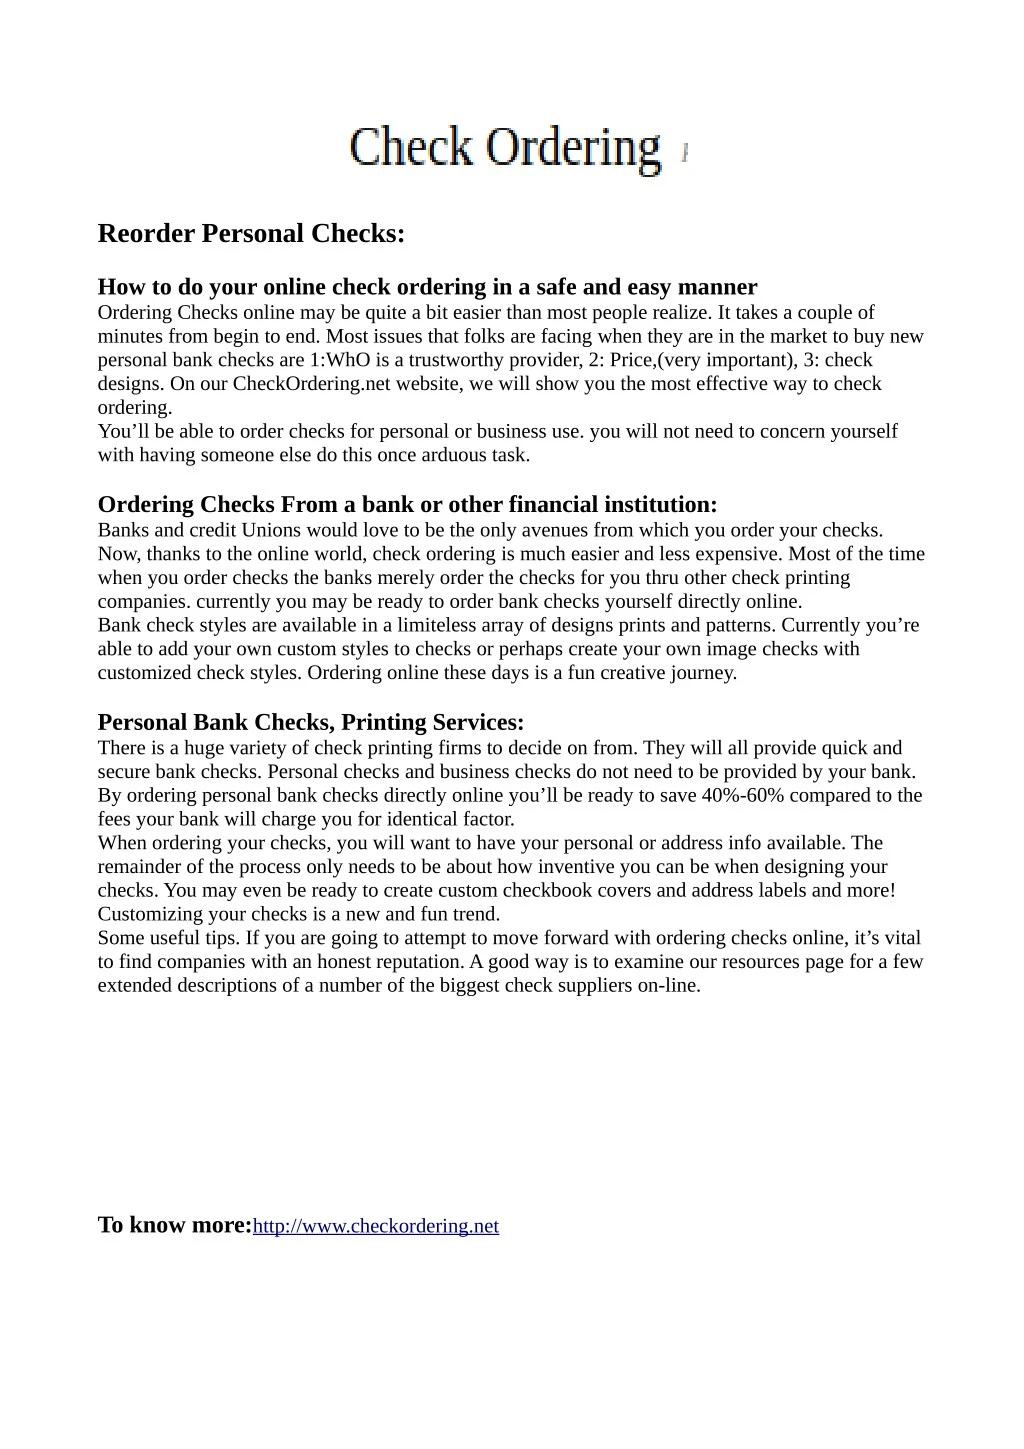 reorder personal checks